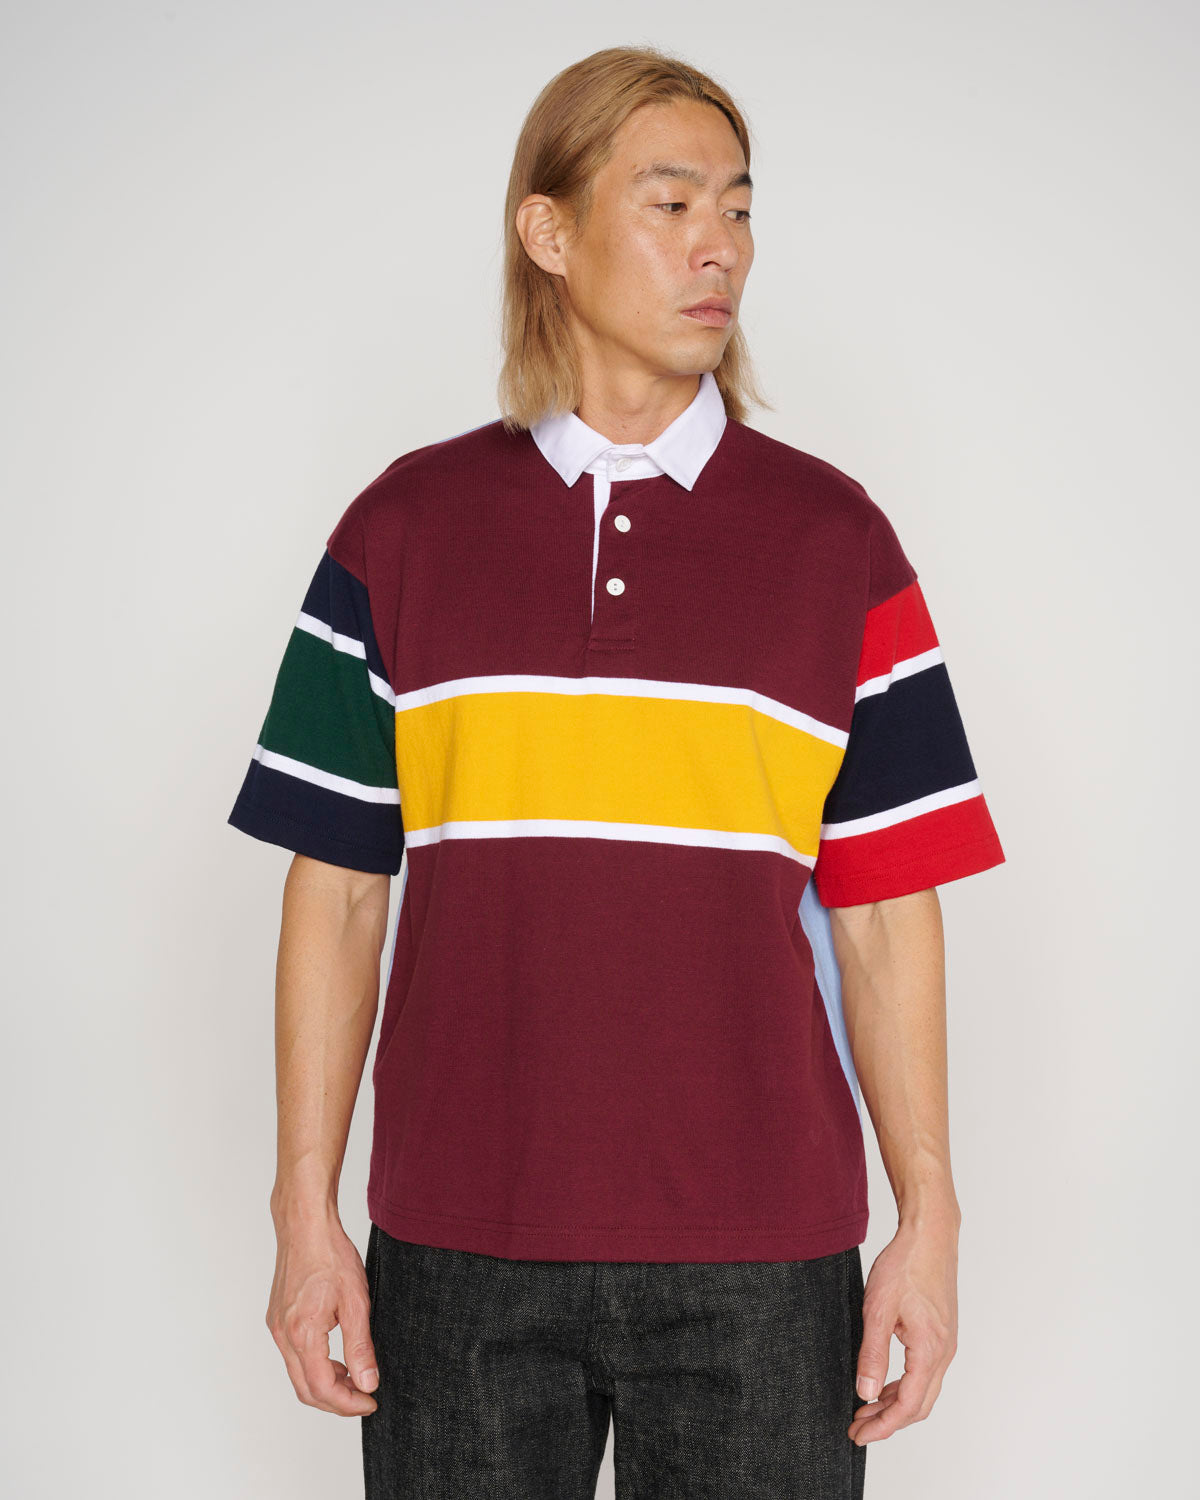 Short Sleeve Rugby Shirt - Burgundy Multi 4